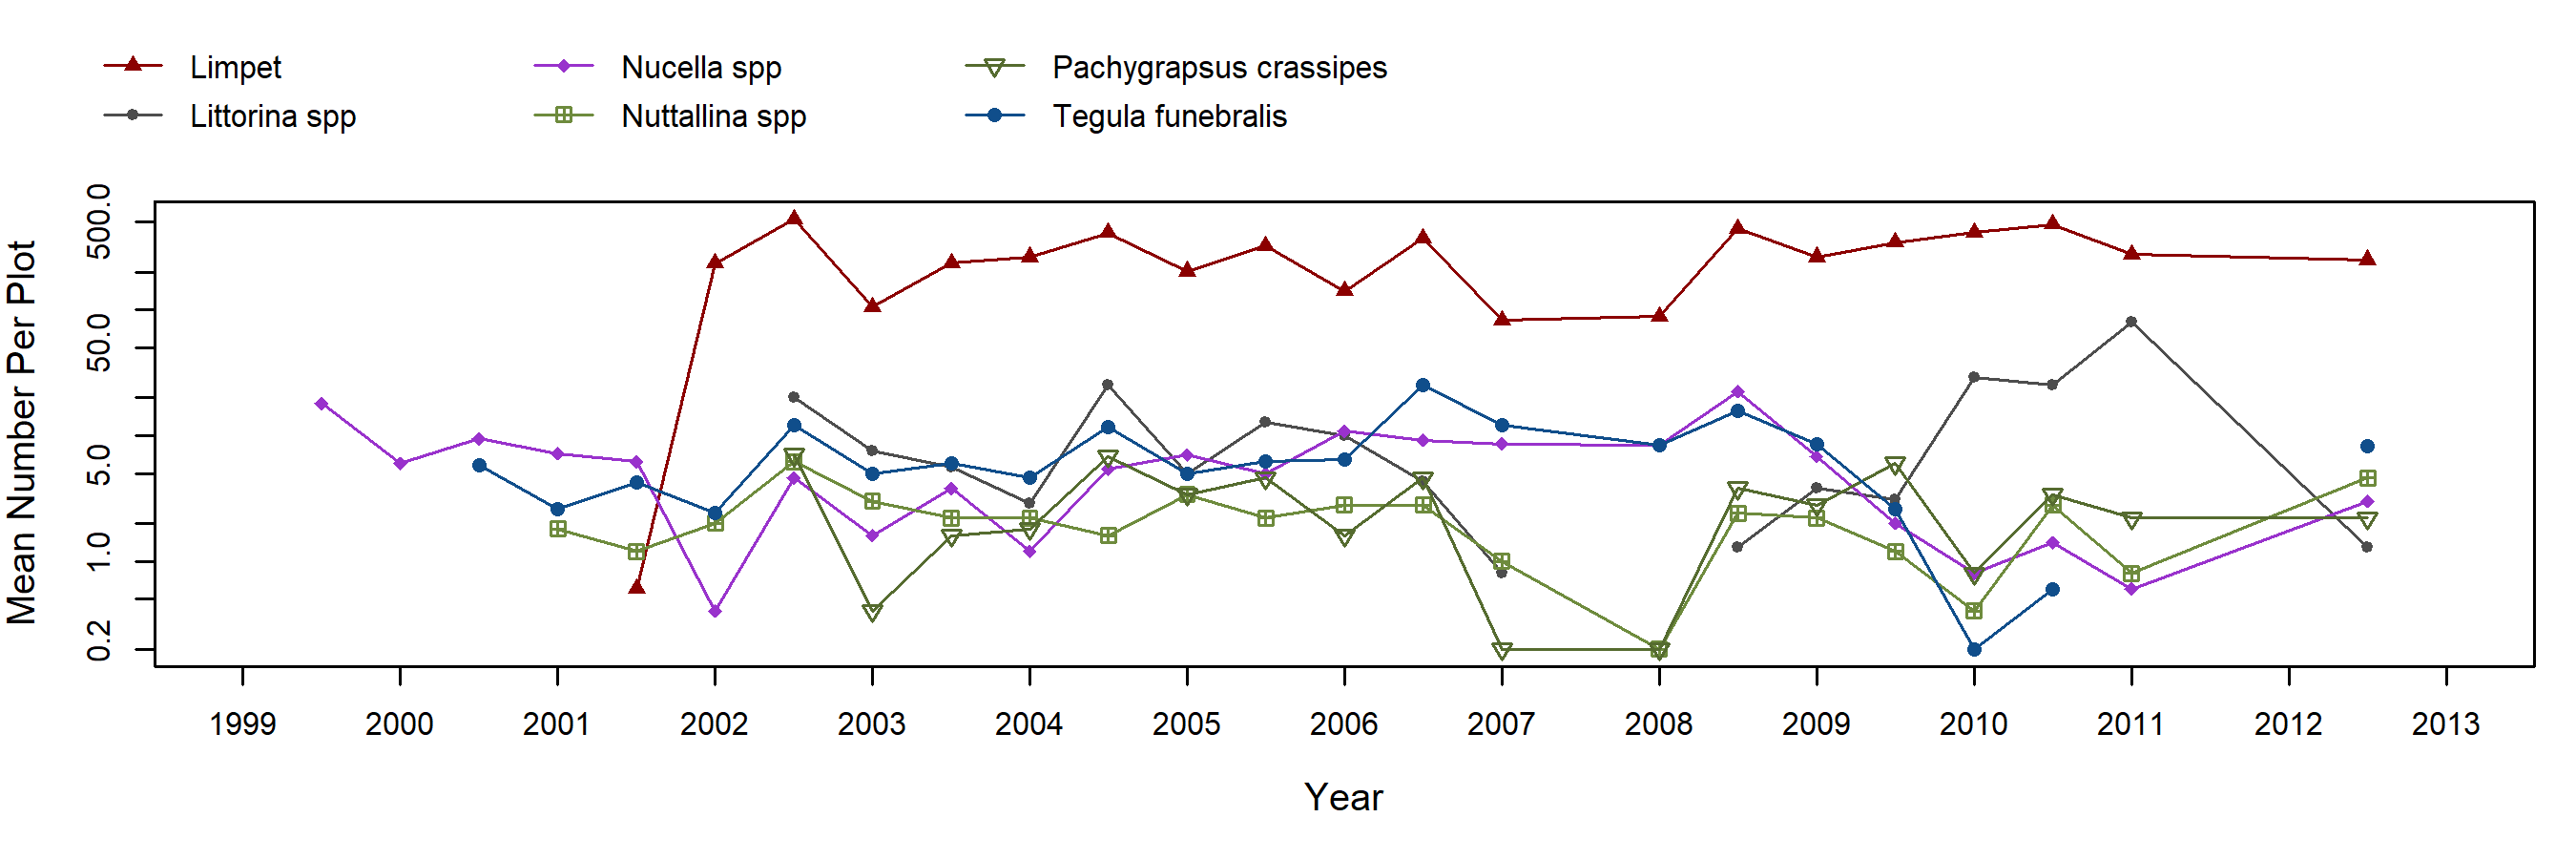 Mill Creek Mytilus trend plot